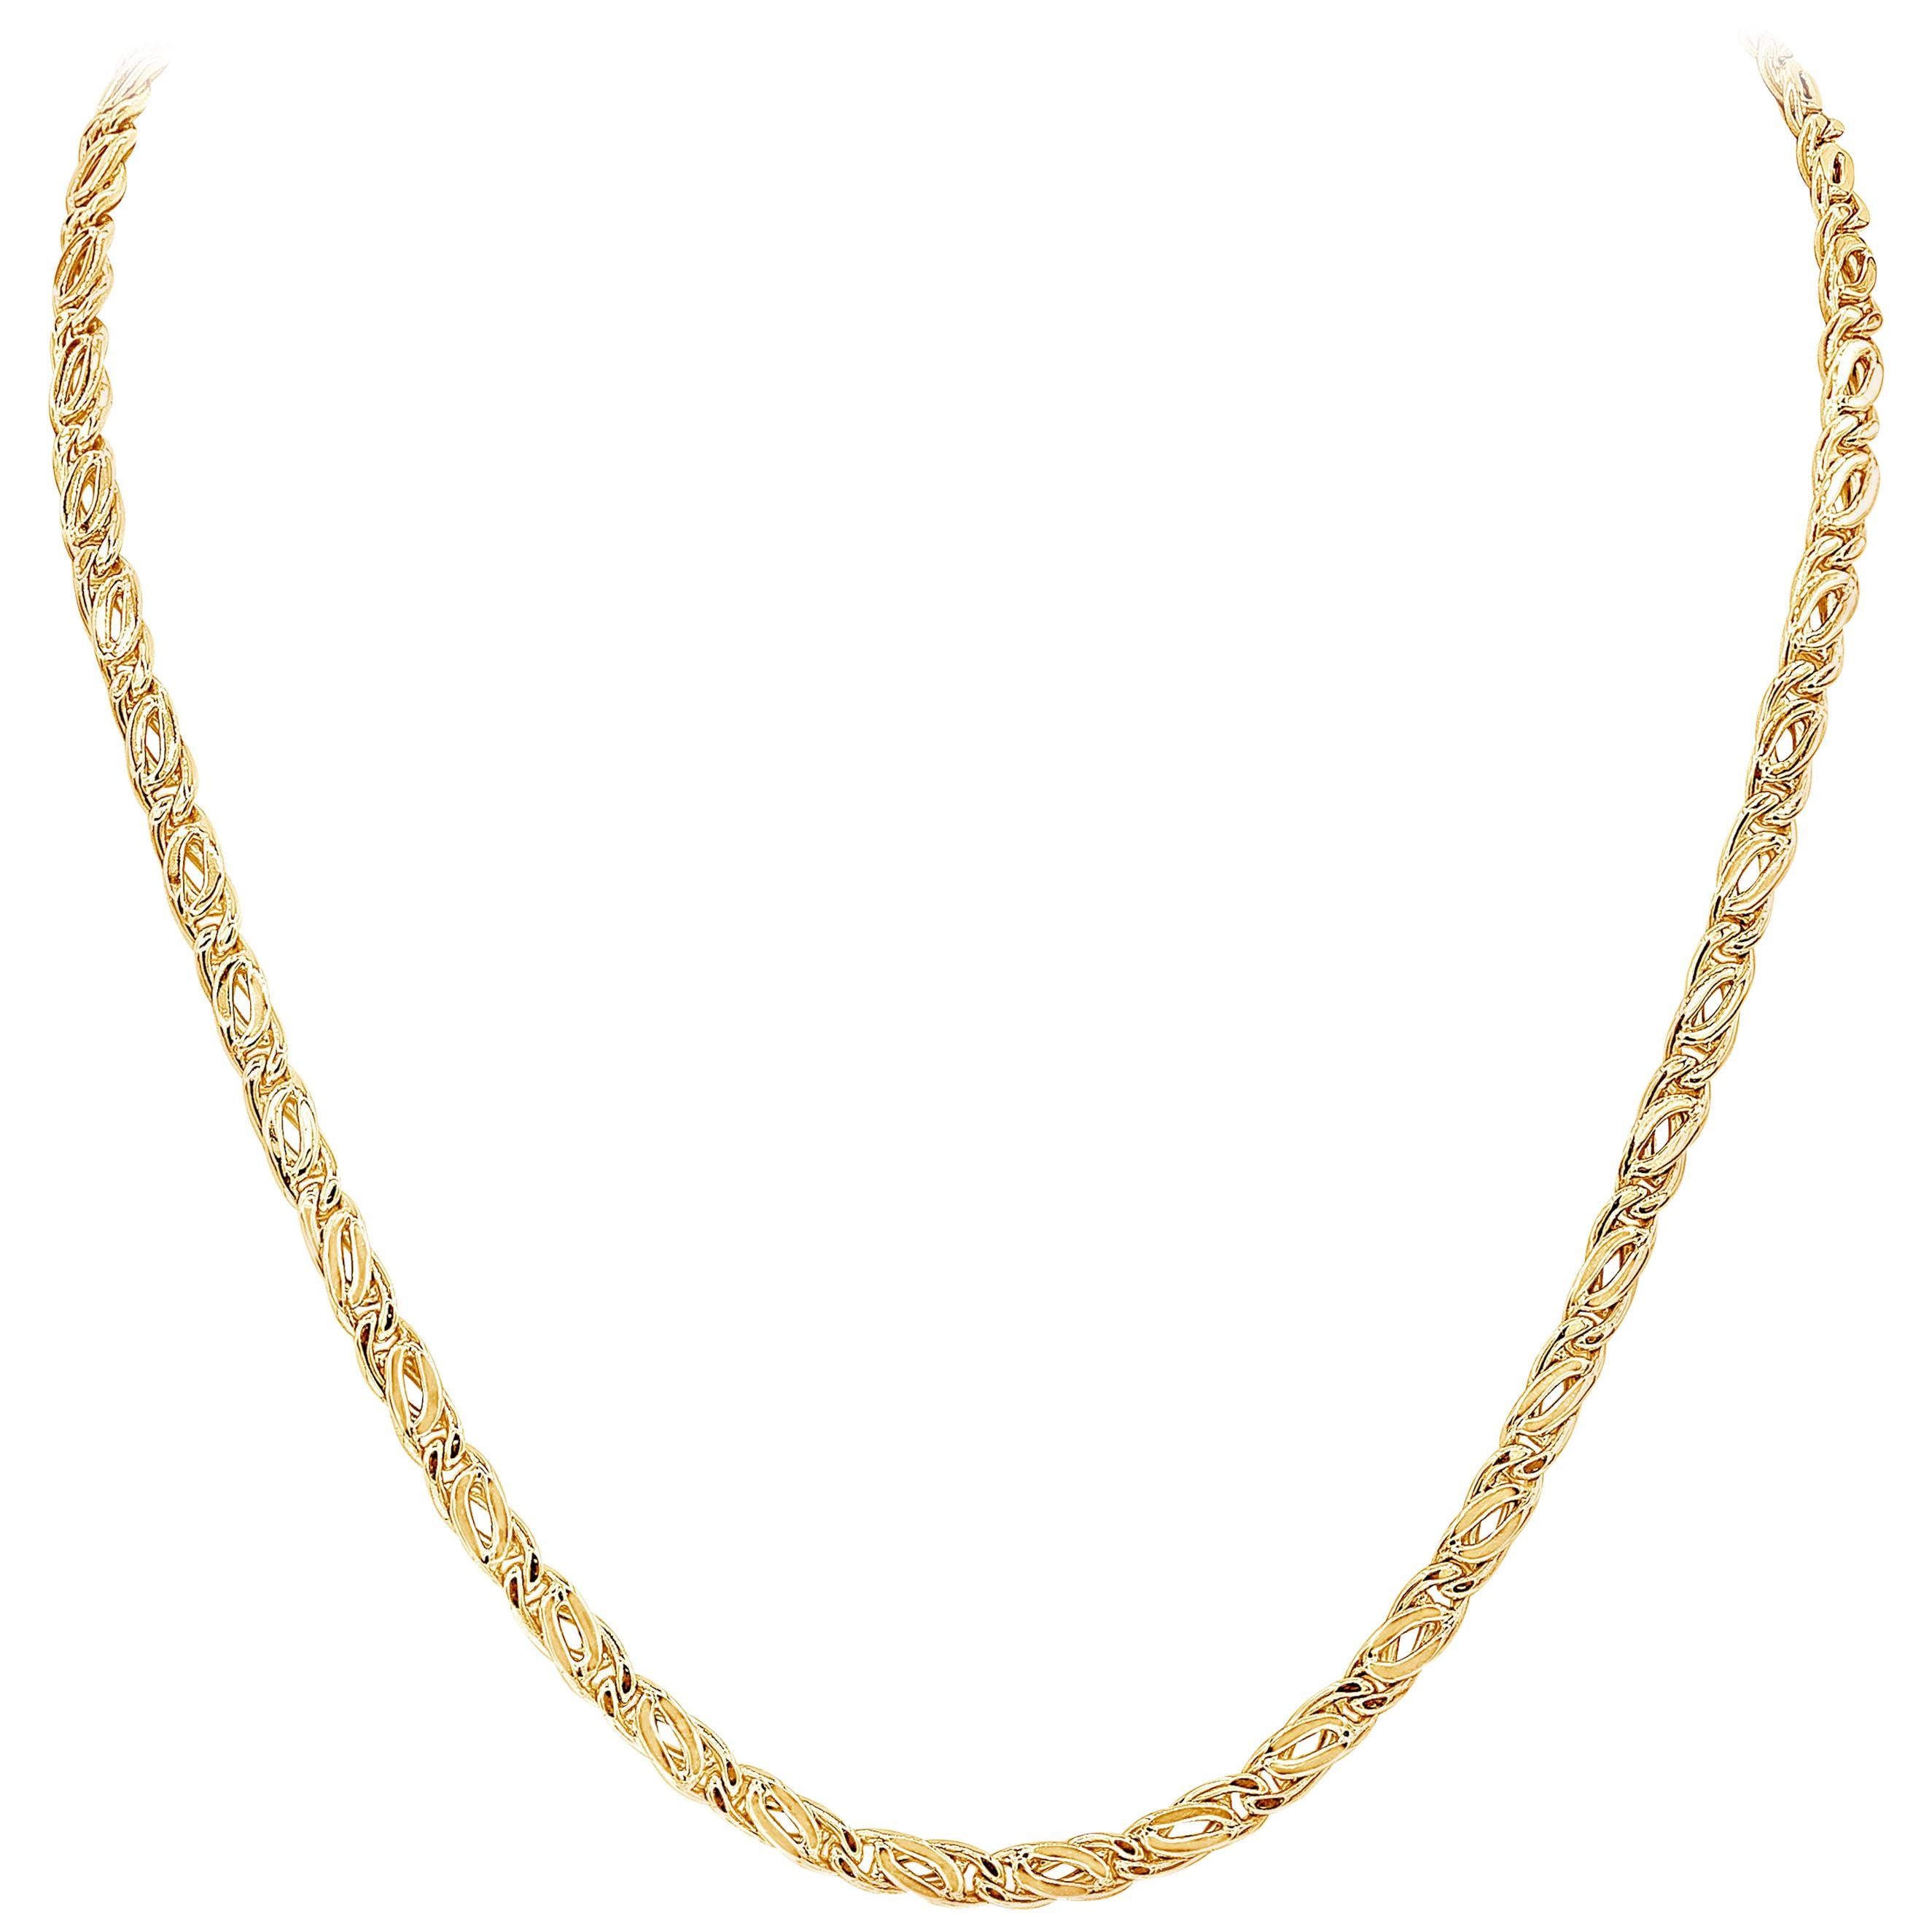 18 Karat Yellow Gold Chain Necklace